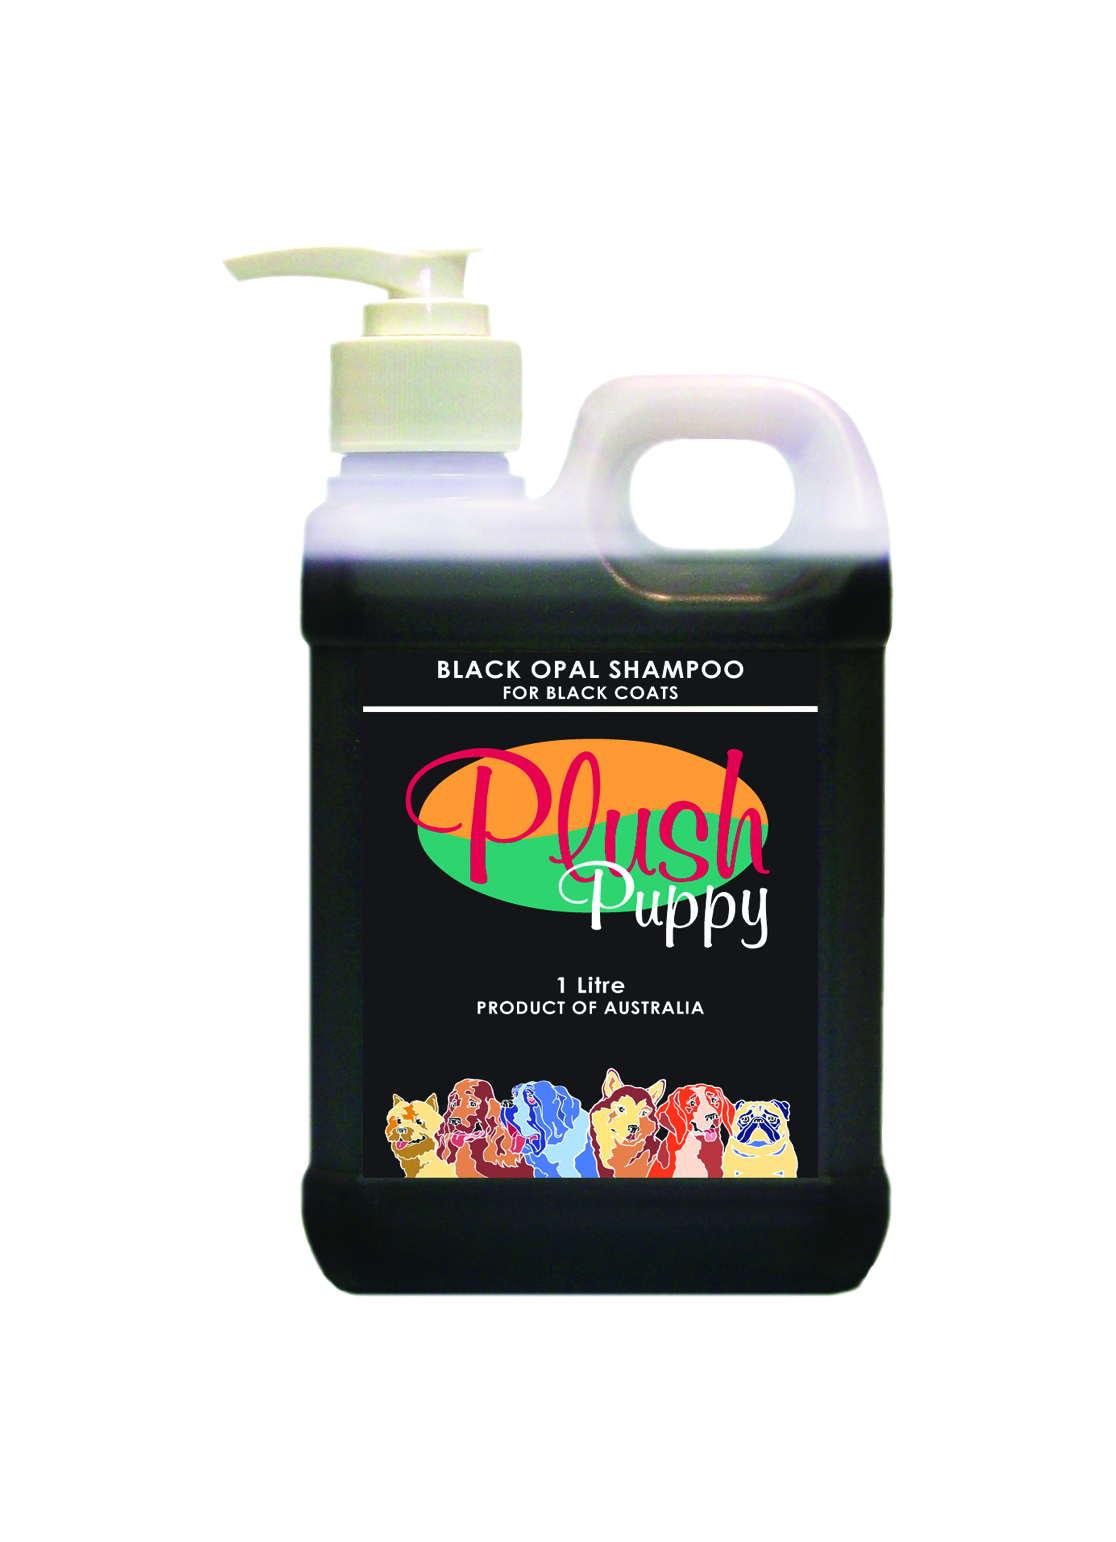 Black Opal Shampoo For Black Coats 500ml | Plush Puppy Slovenia